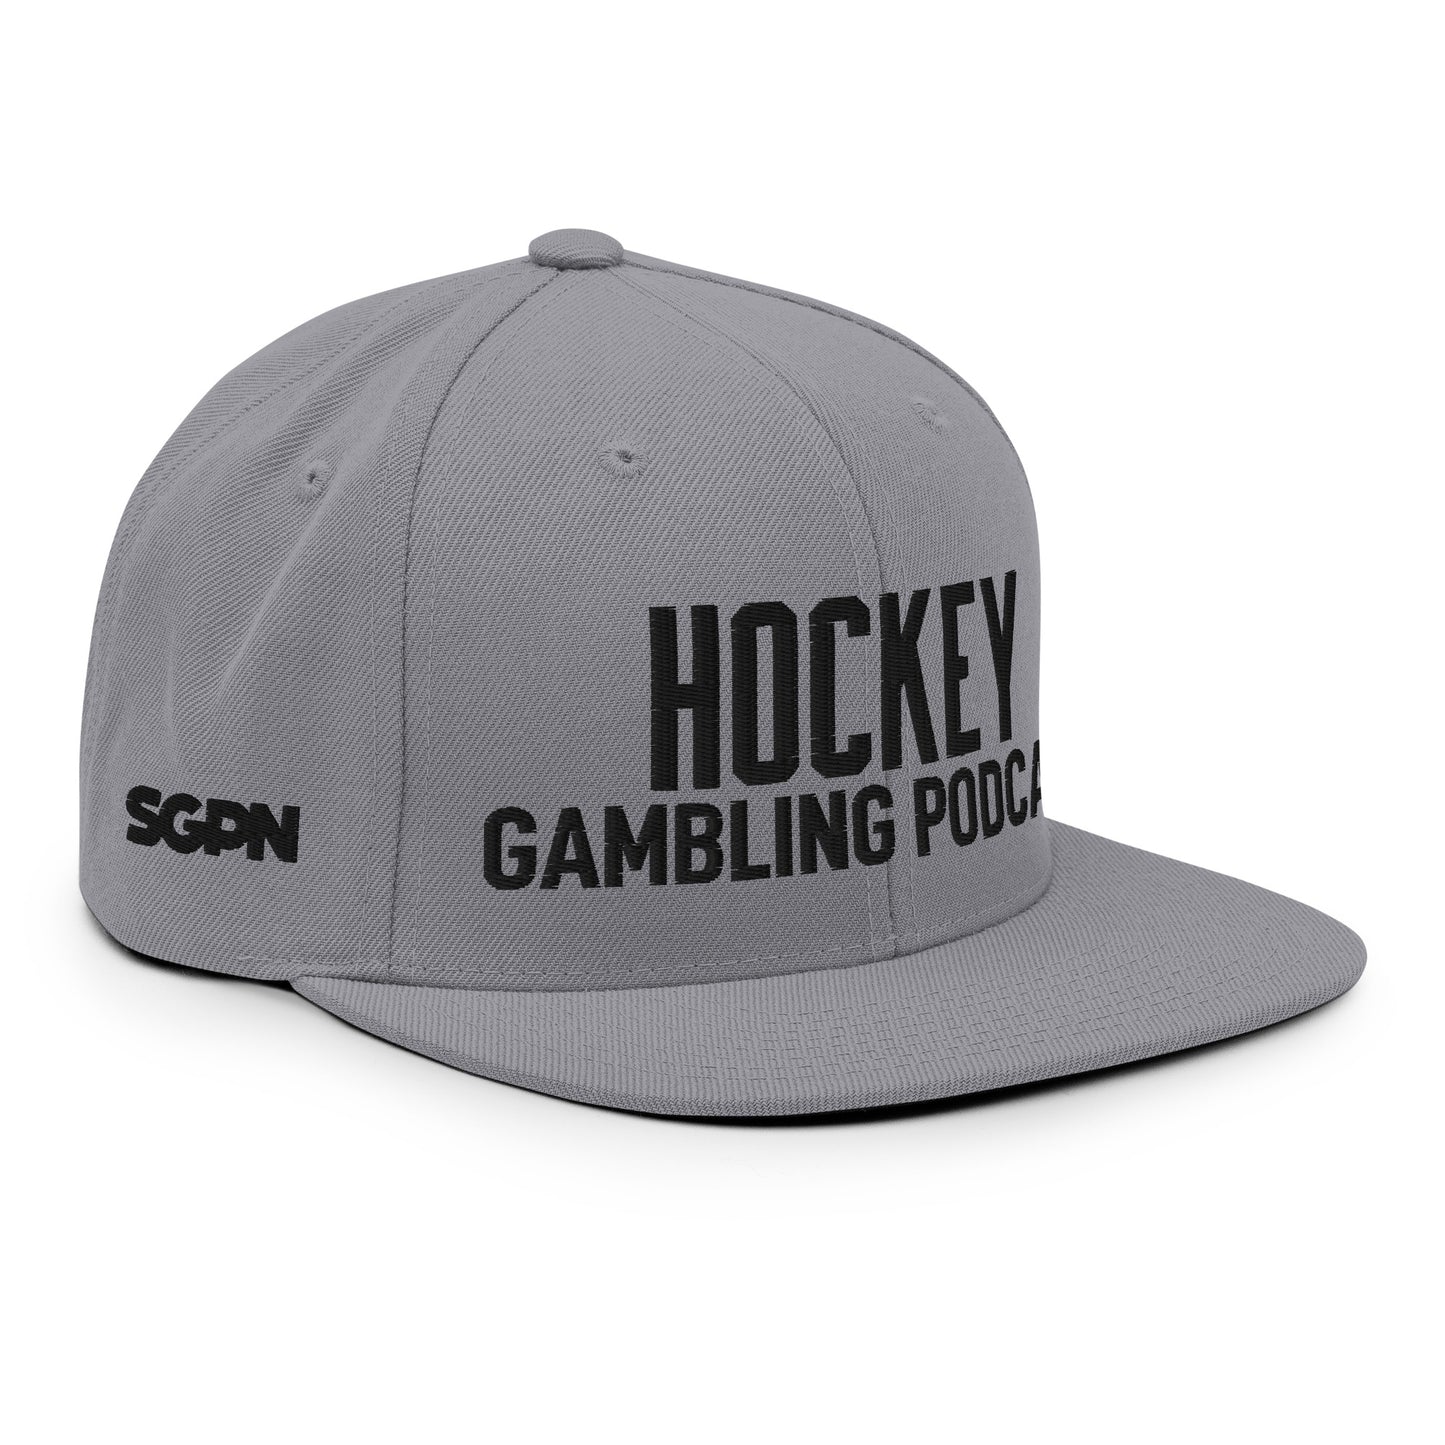 Hockey Gambling Podcast - Snapback Hat (Black Logo)